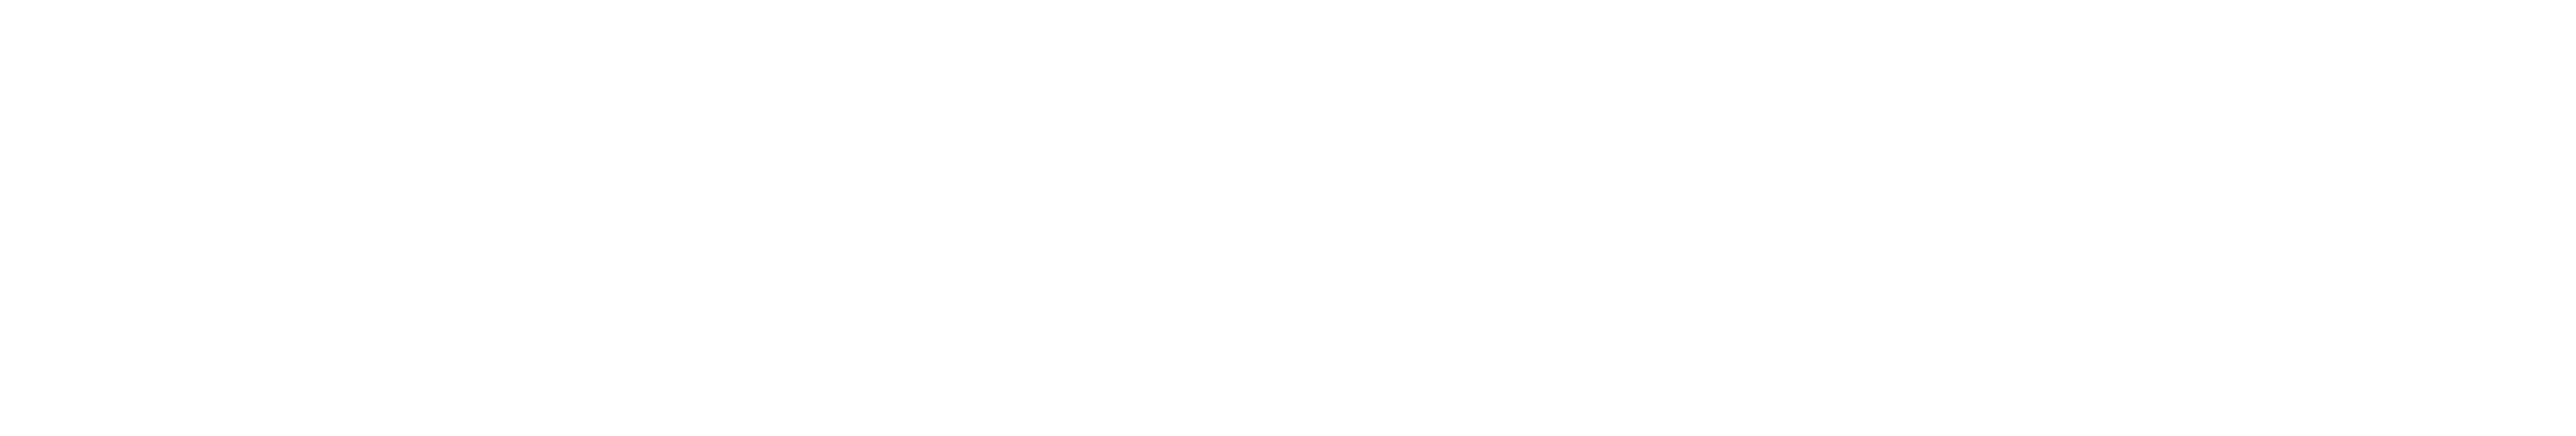 DiLink - 比亚迪汽车工业有限公司